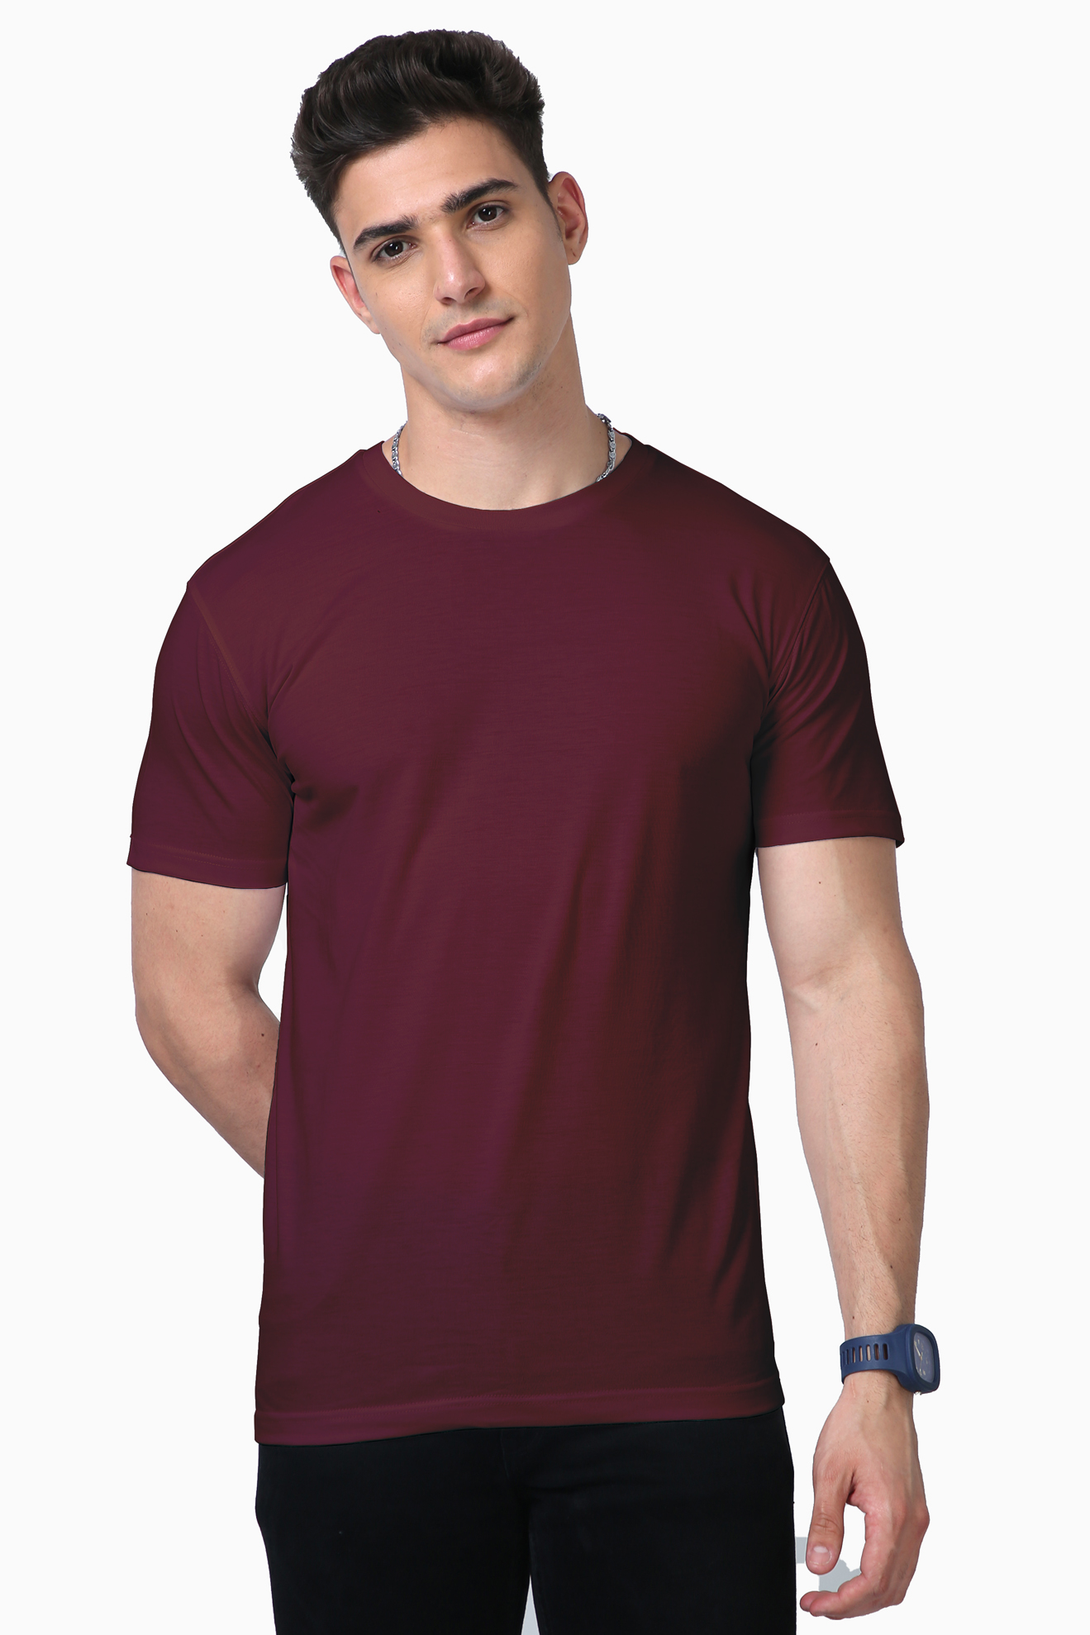 Plain Supima T-Shirts For Men - WowWaves - 3